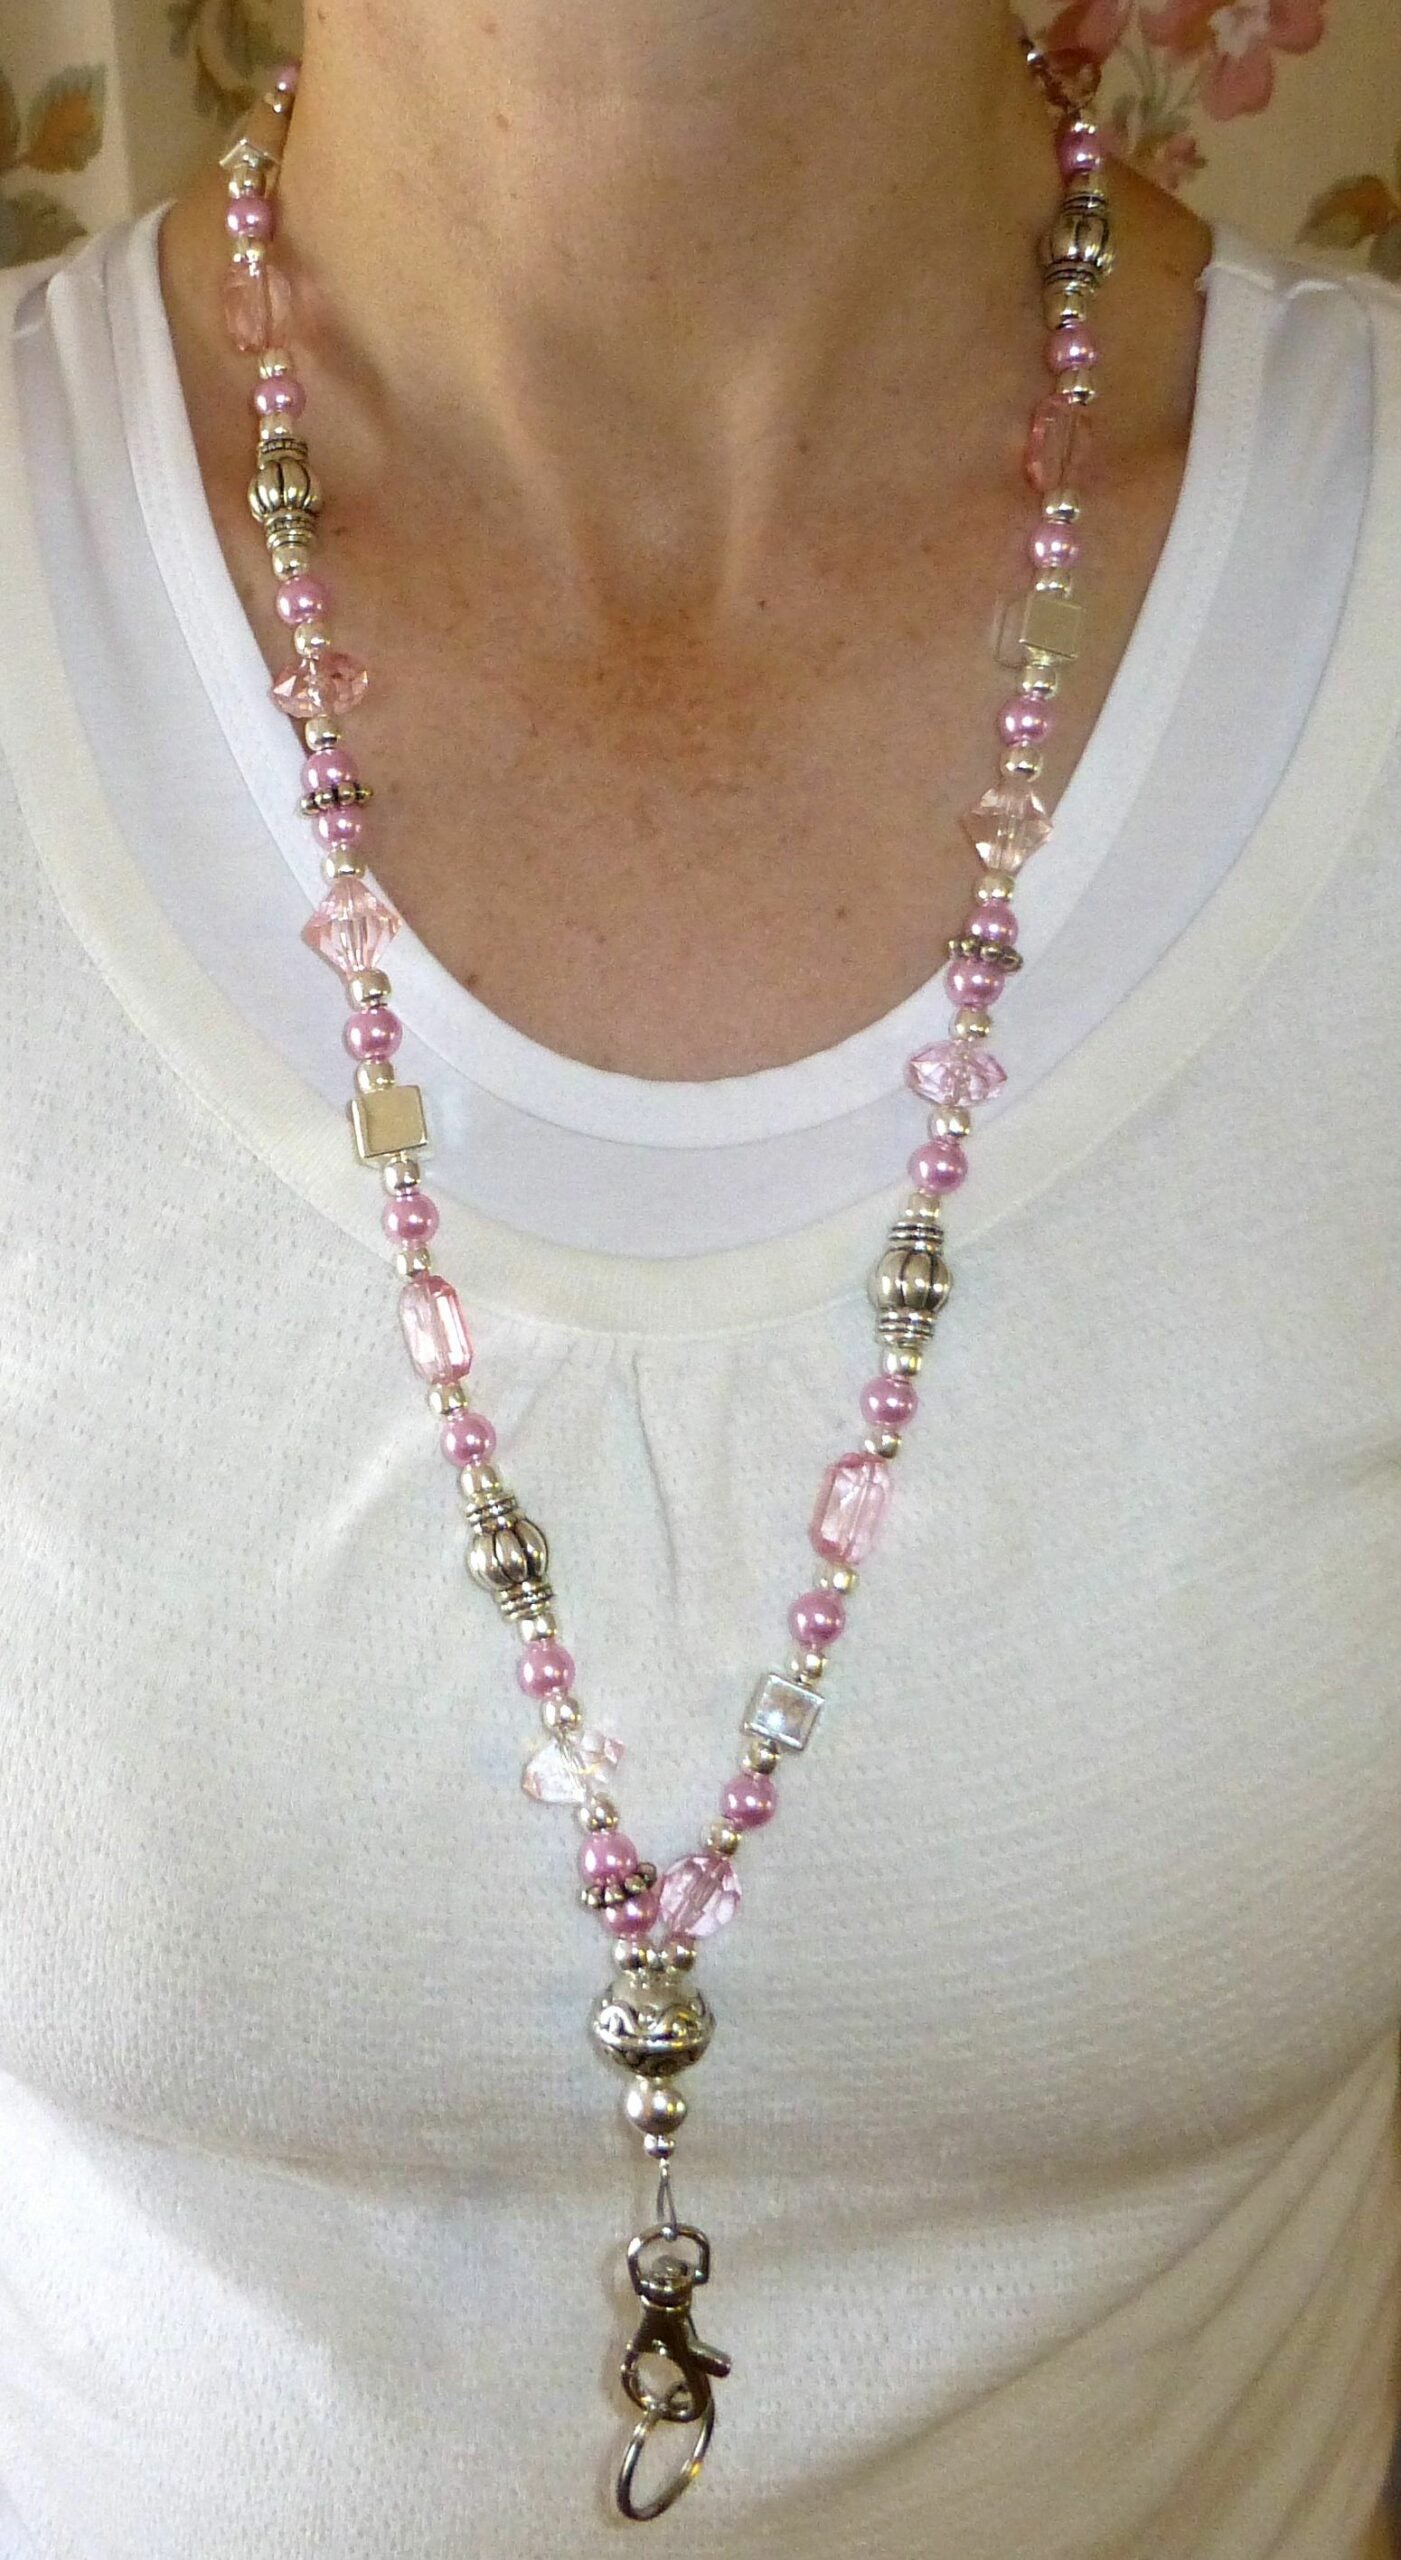 Slim Pink Fashion Lanyard with break away magnetic clasp